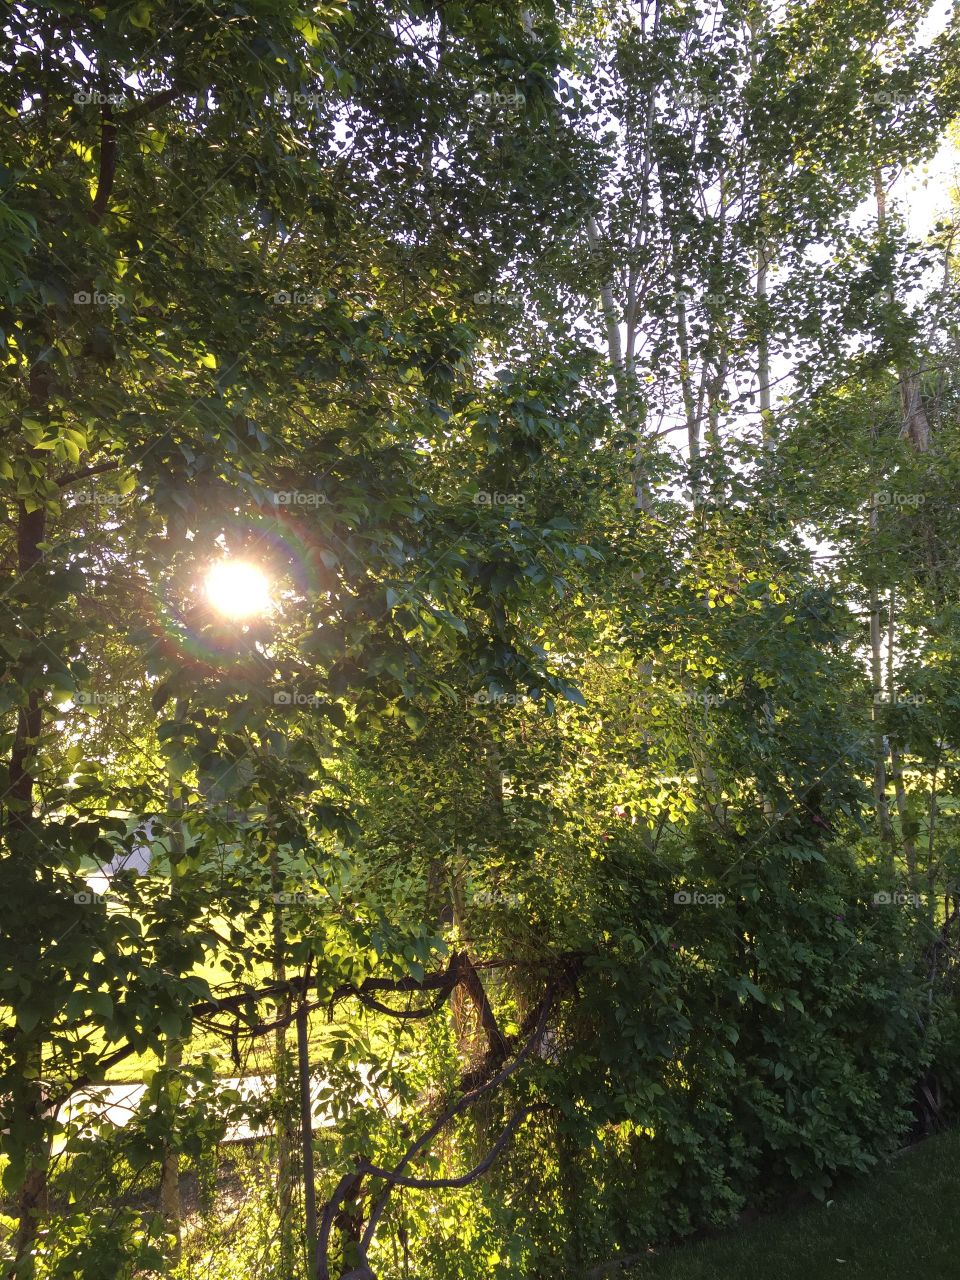 Summer Evening. Green, lush trees, sun beams